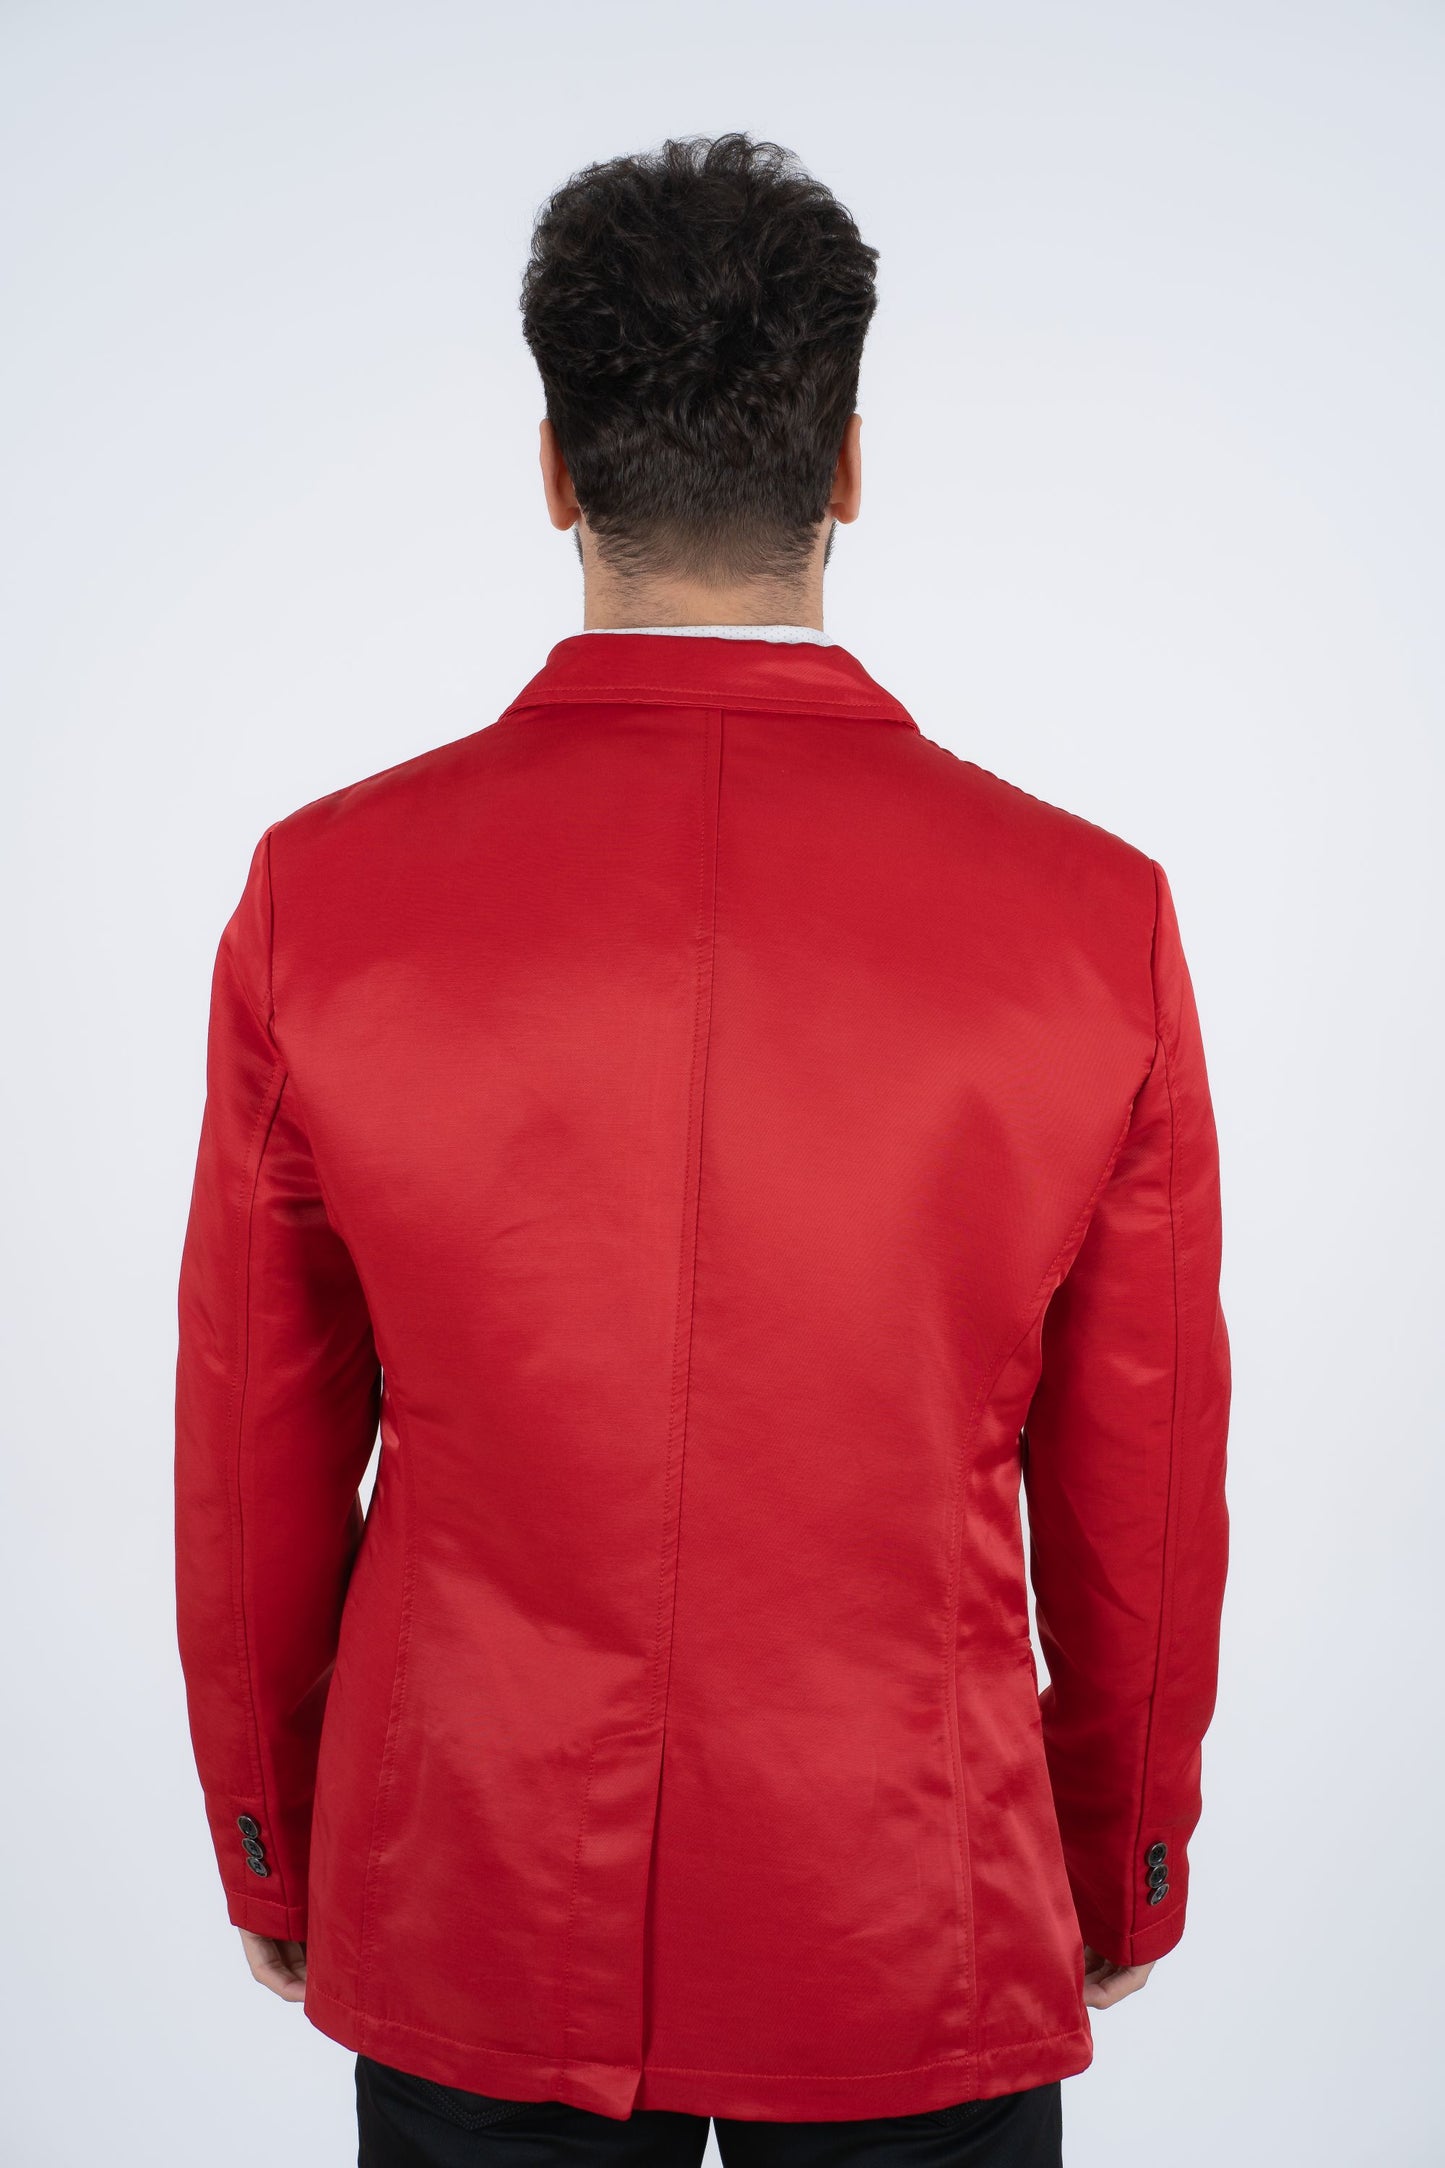 Men's Double Button Red Blazer